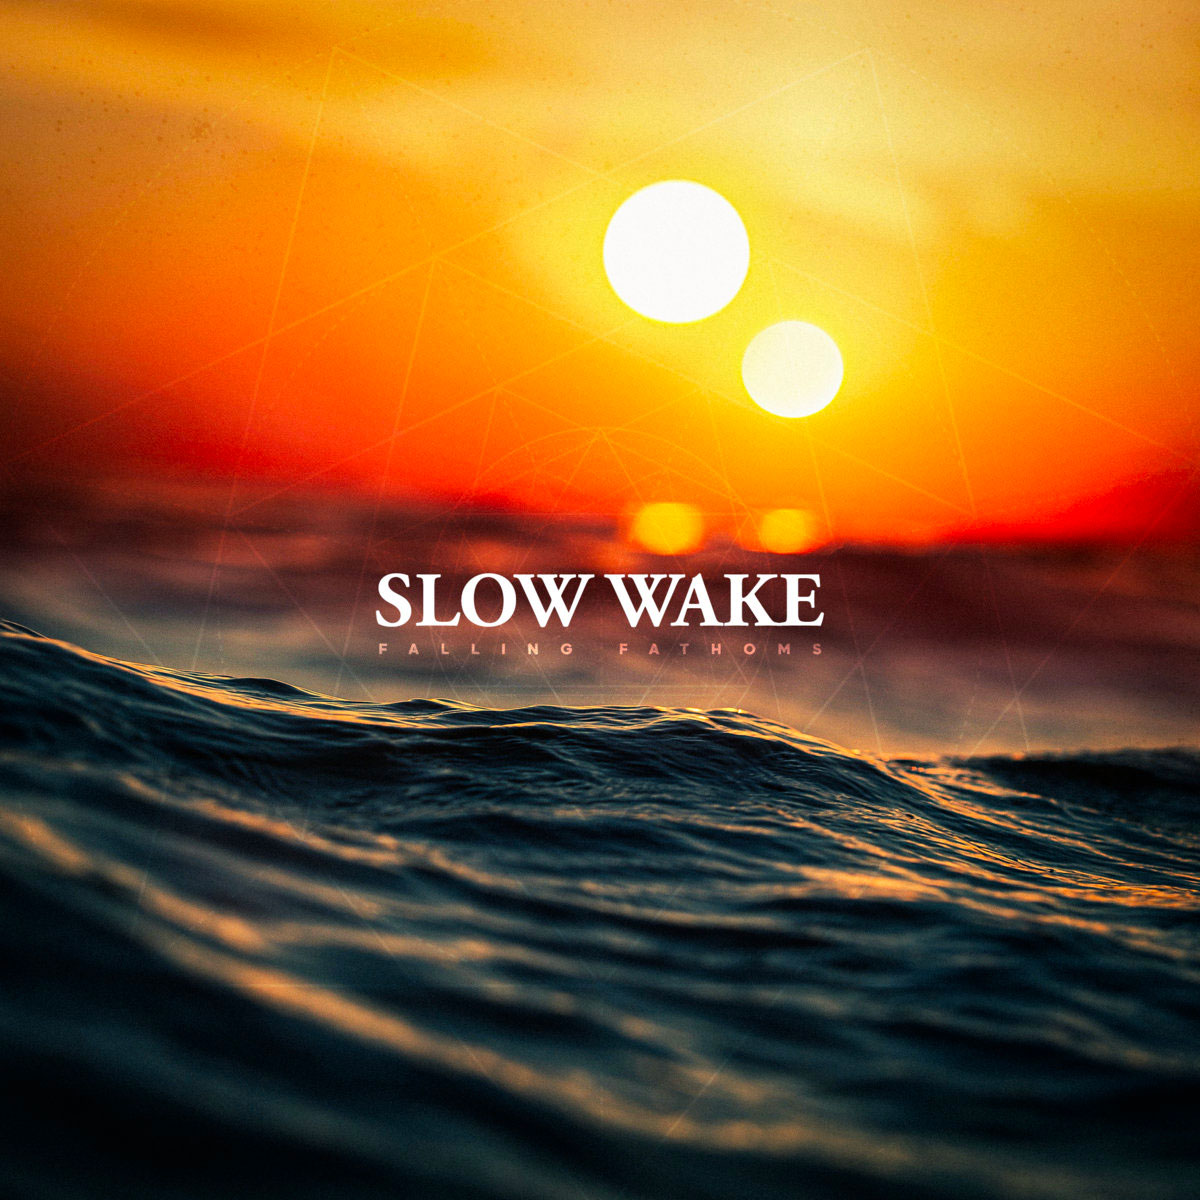 Falling Fathoms by Slow Wake